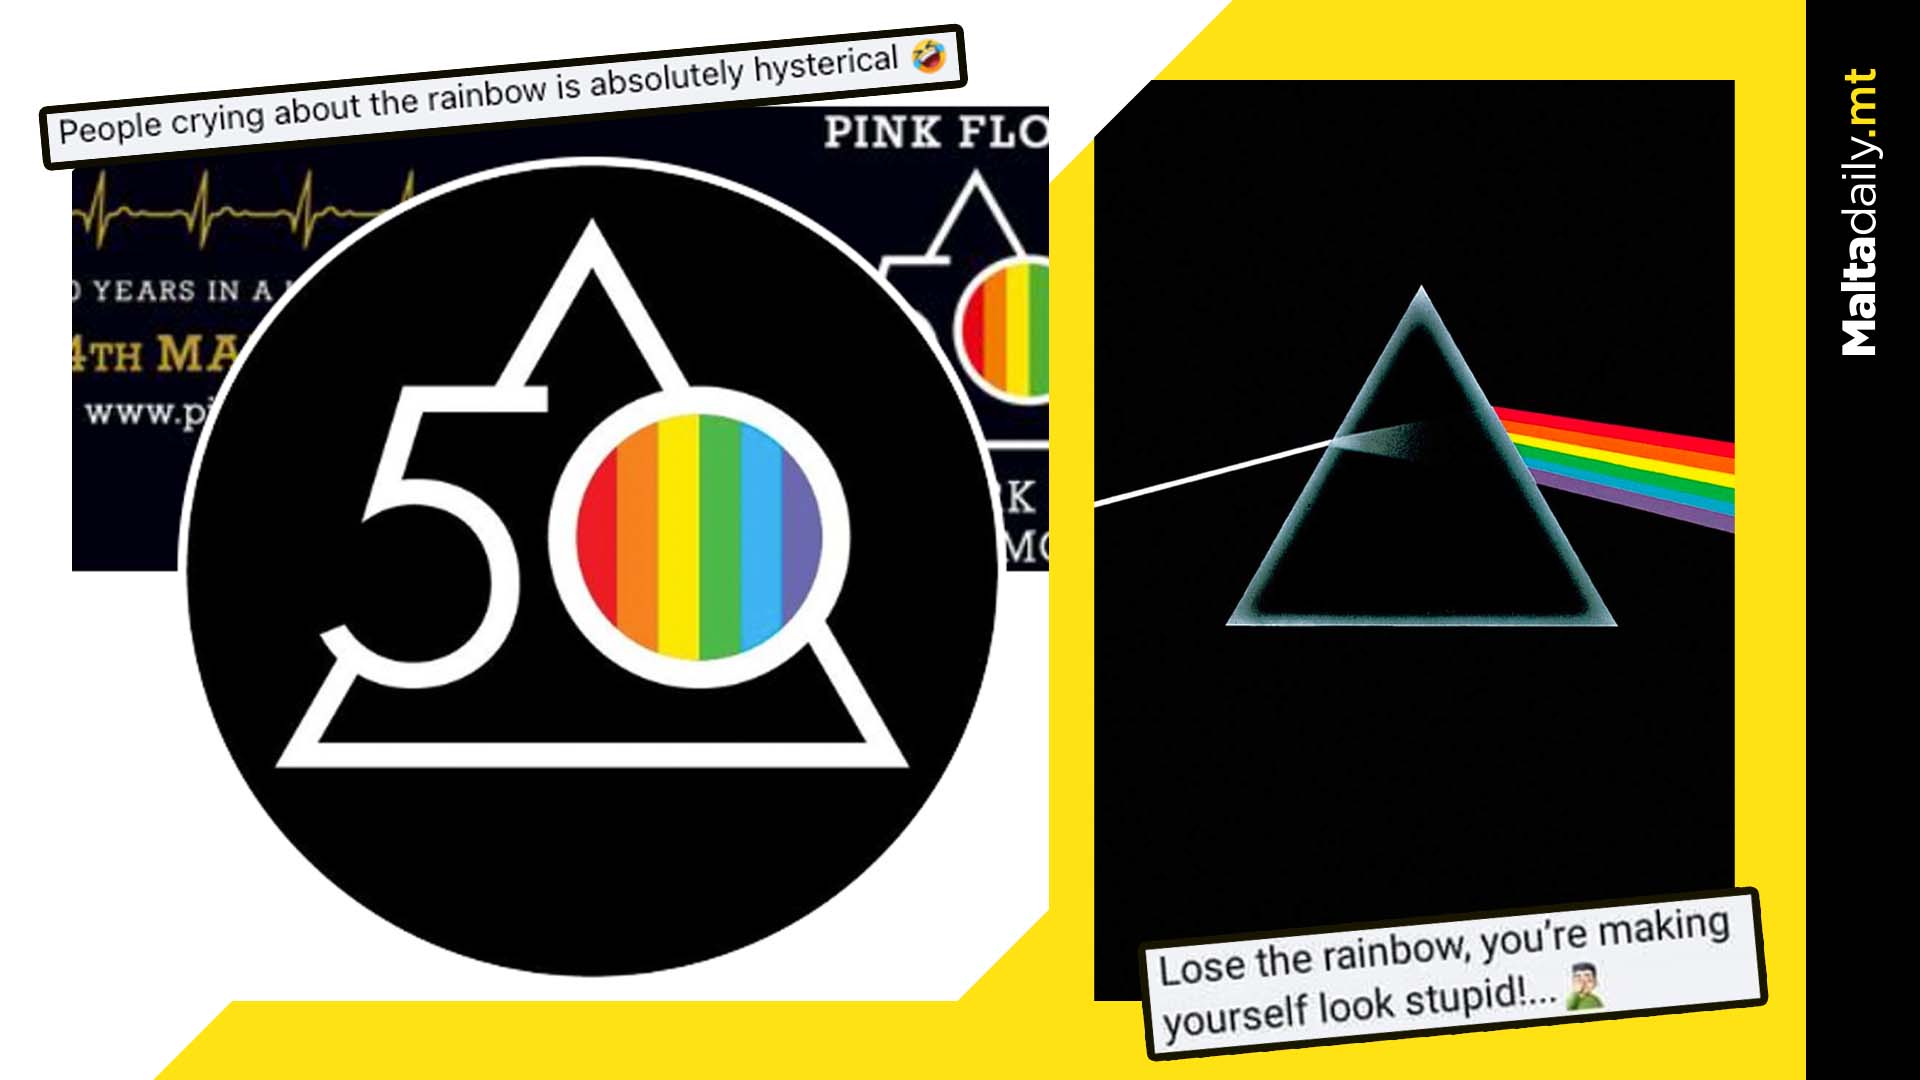 Pink Floyd 50th anniversary logo accused of going ‘woke’ over rainbow